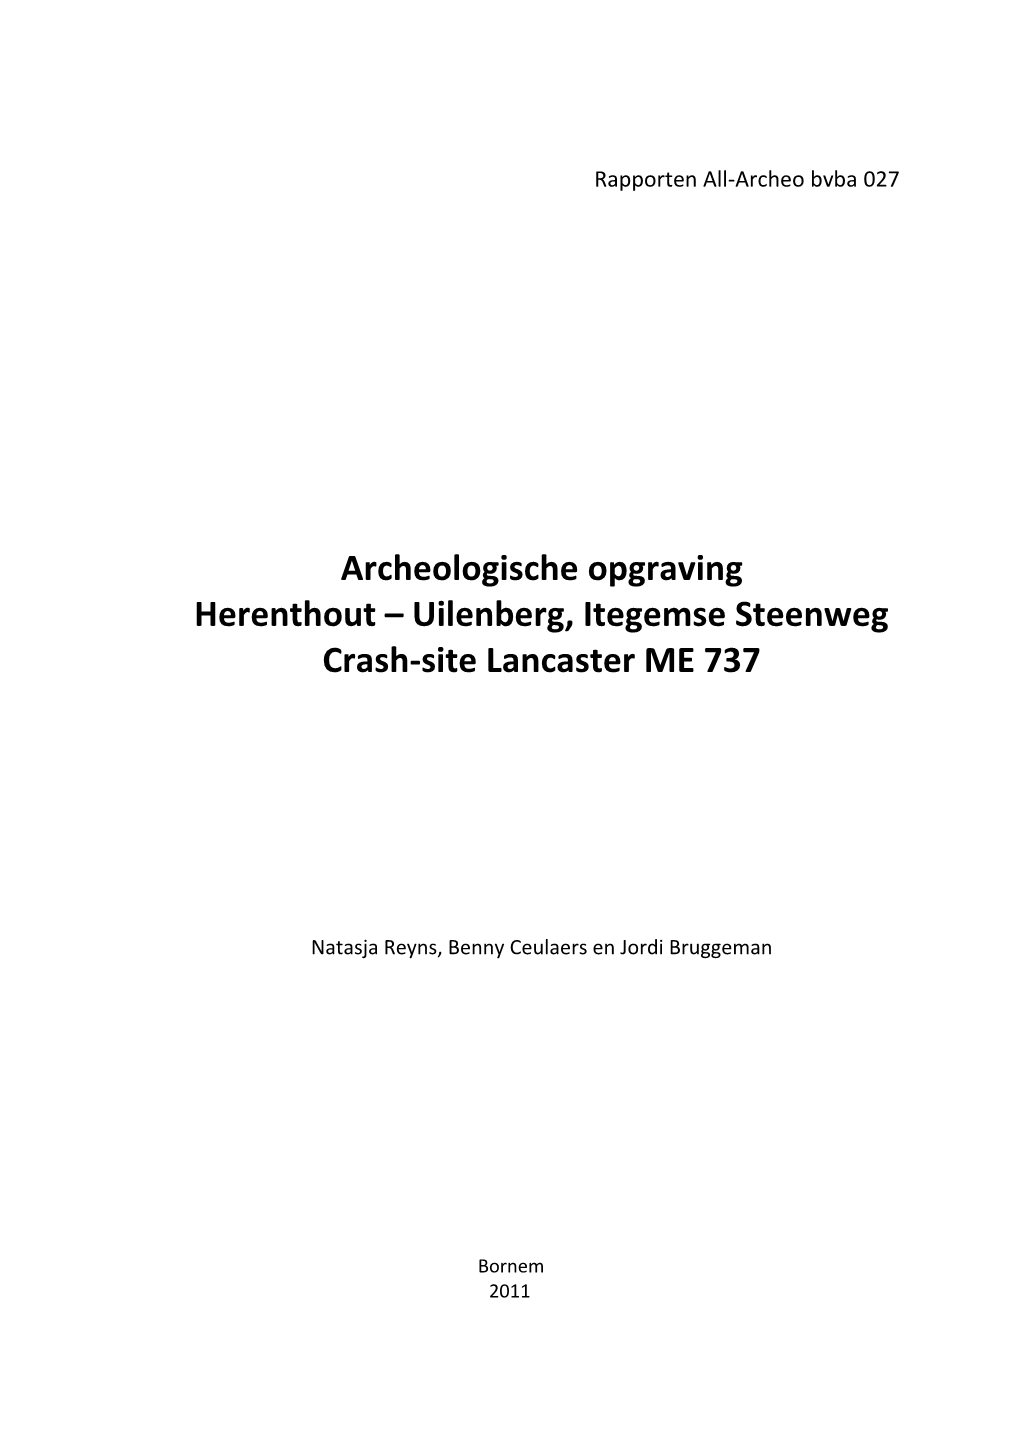 Archeologische Opgraving Herenthout – Uilenberg, Itegemse Steenweg Crash-Site Lancaster ME 737